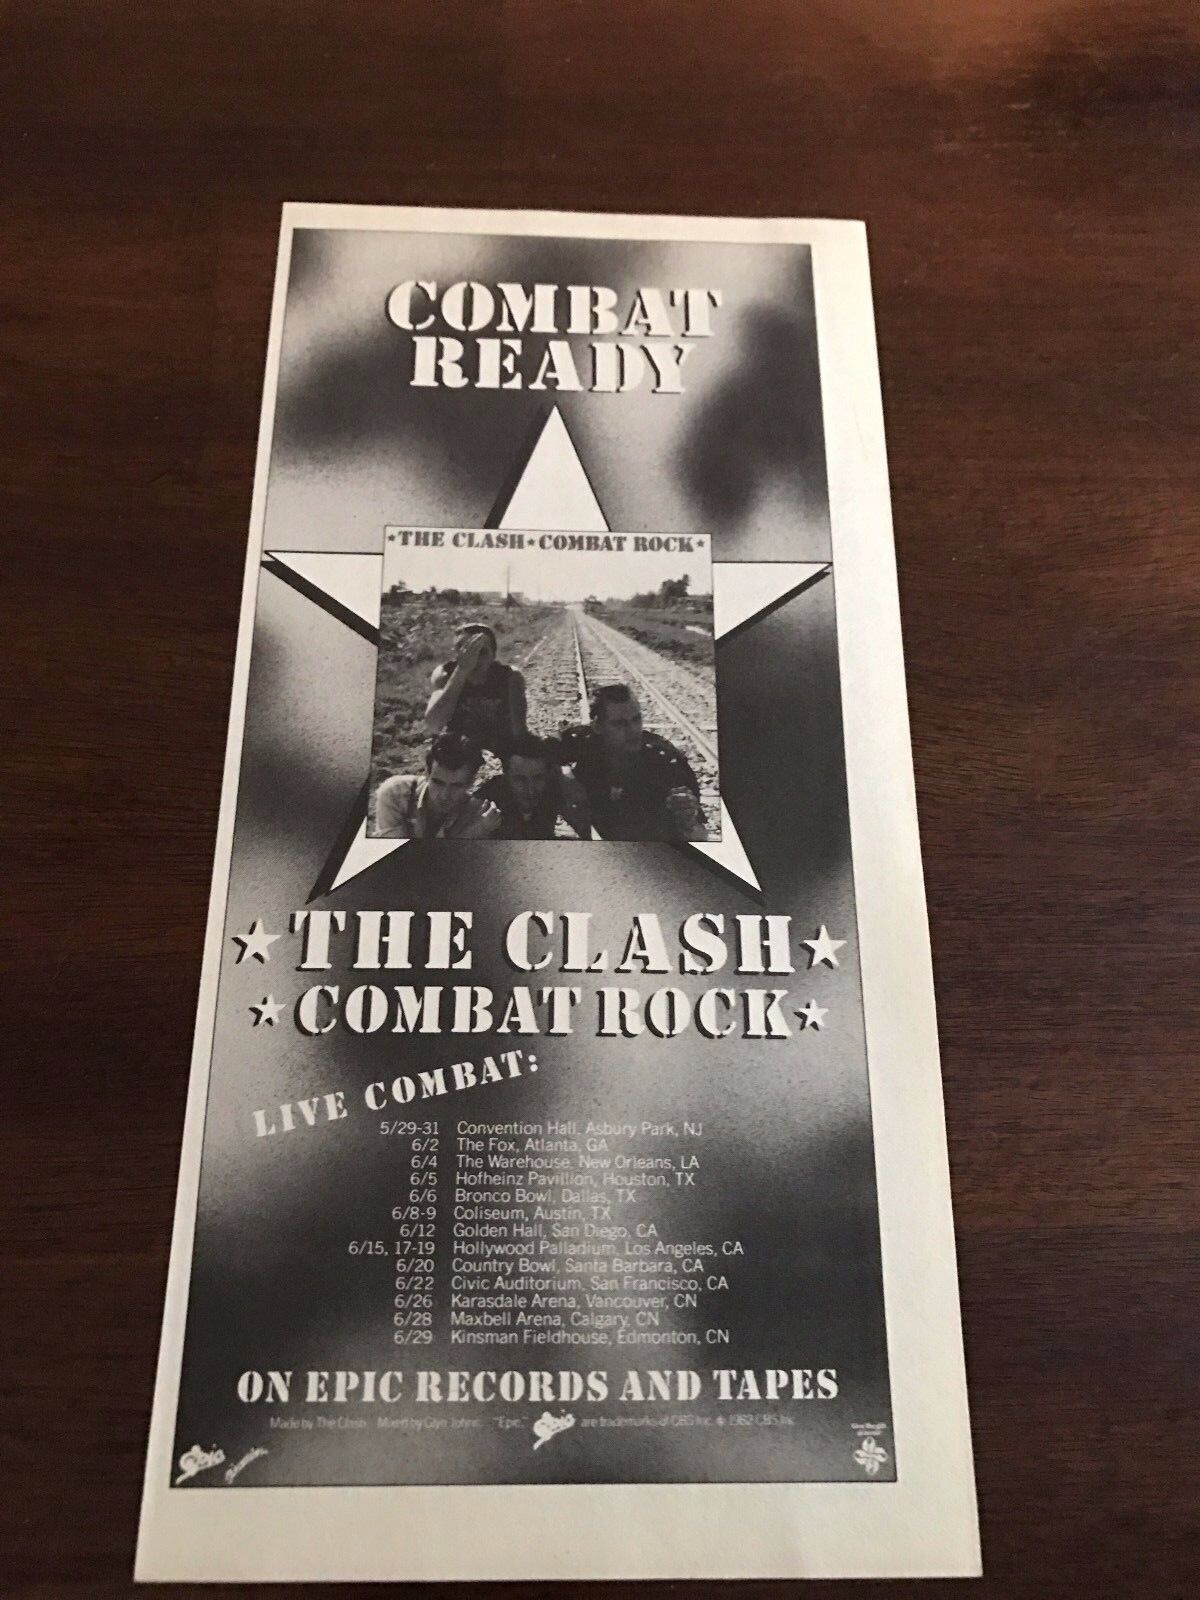 1982 Vintage 5x11 Promo Print Ad For The Clash Album Combat Rock With Tour Dates